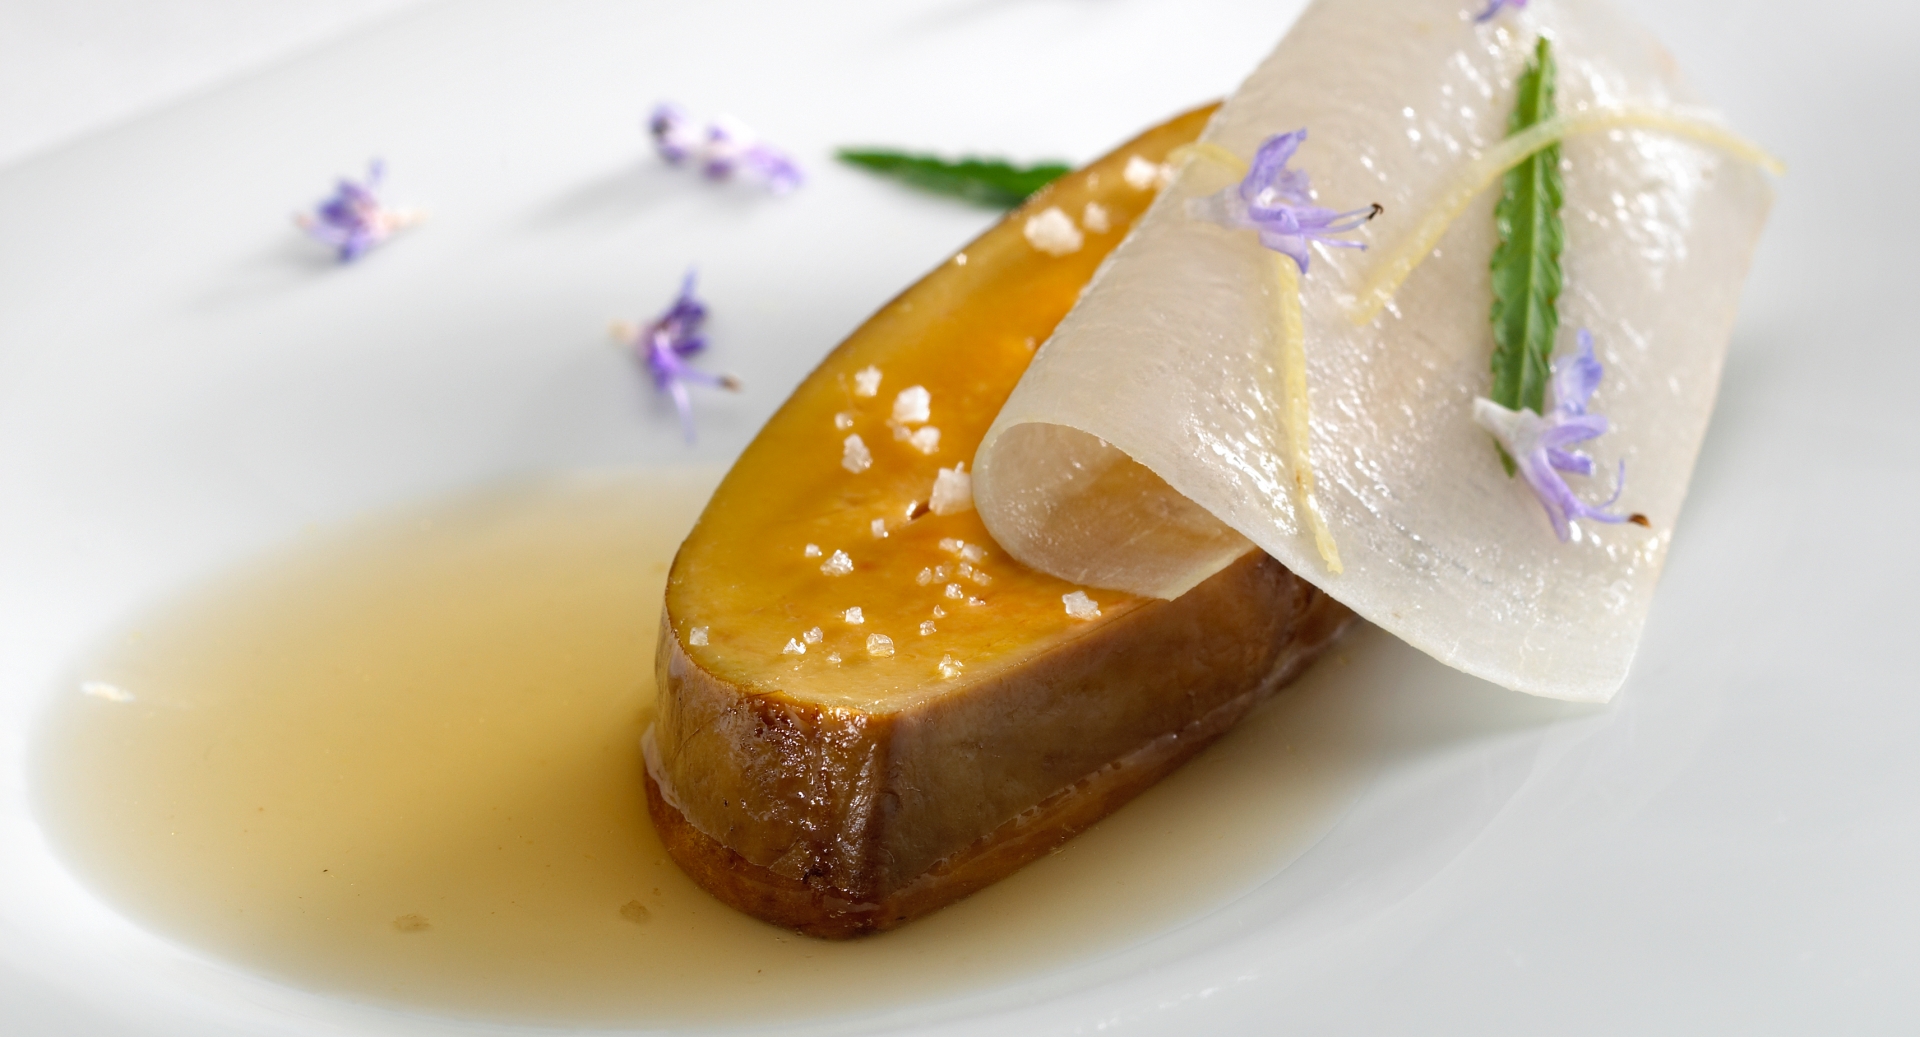 Roast escalope of foie gras served on a charcoal grill. Crystallised yucca in a date-stone consommé. Marigold flowers [Tagetes signata pumila].
PHOTO: José Luis López de Zubiría / Mugaritz